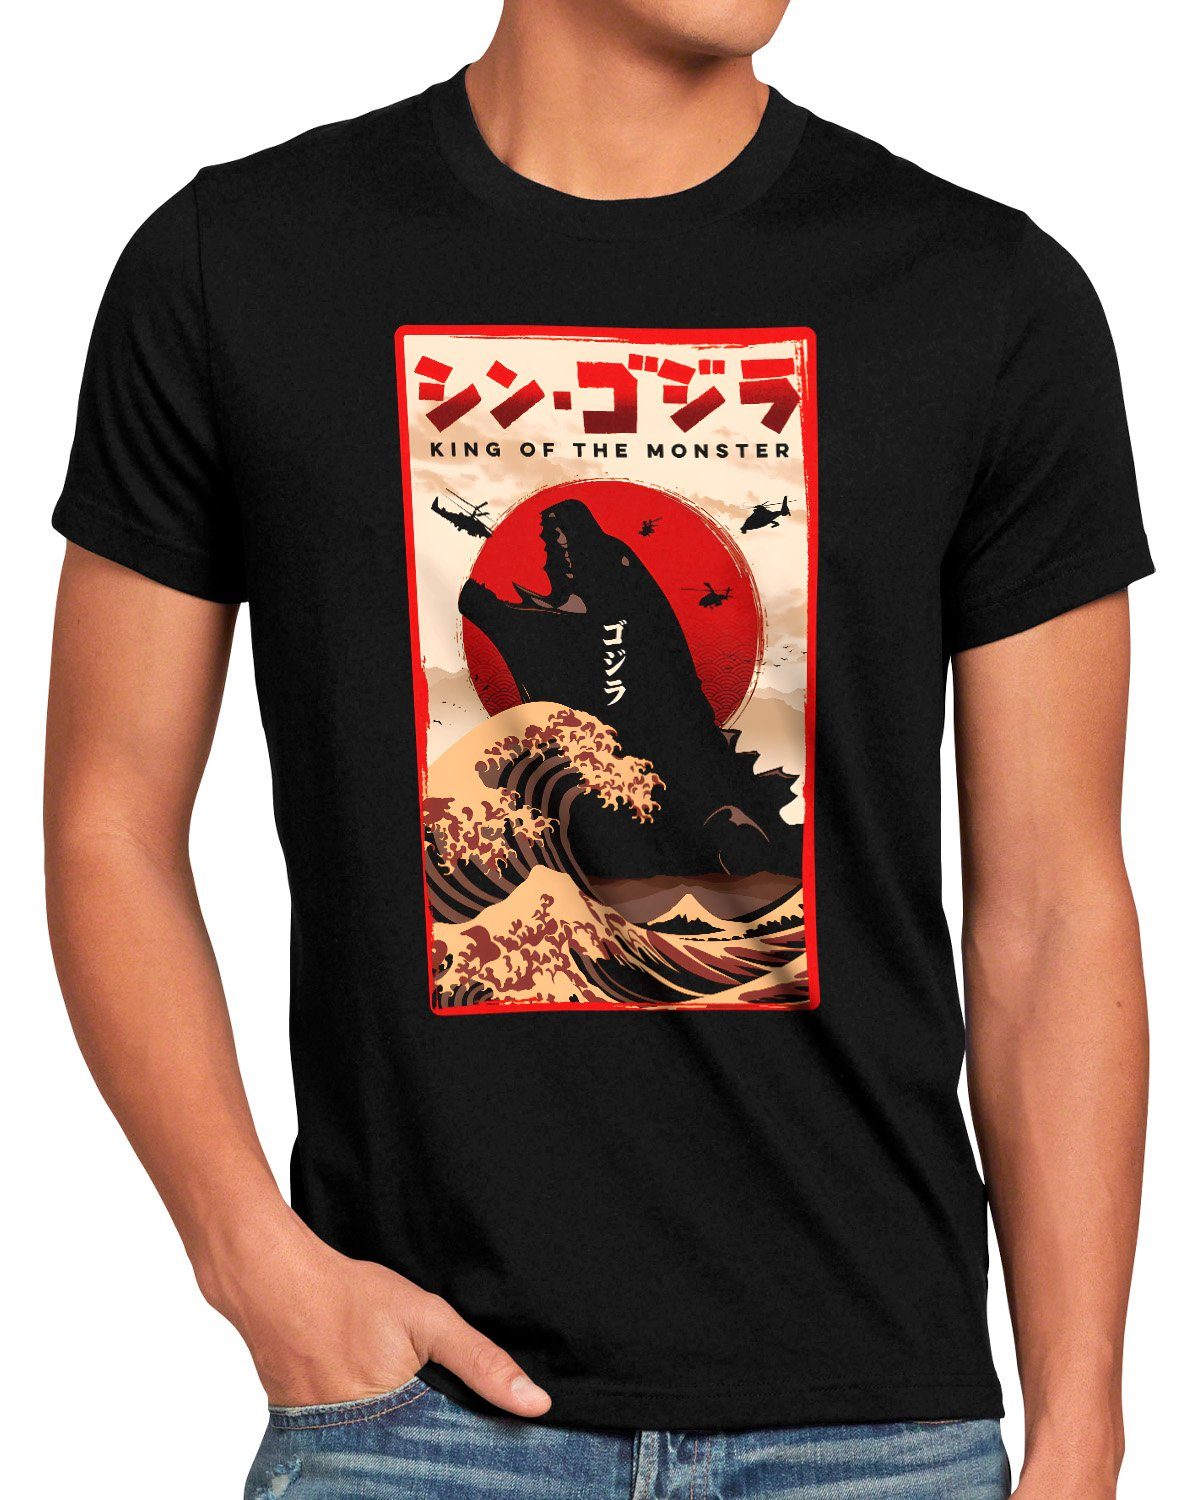 Print-Shirt monster godzilla kaiju japan nippon style3 tokio